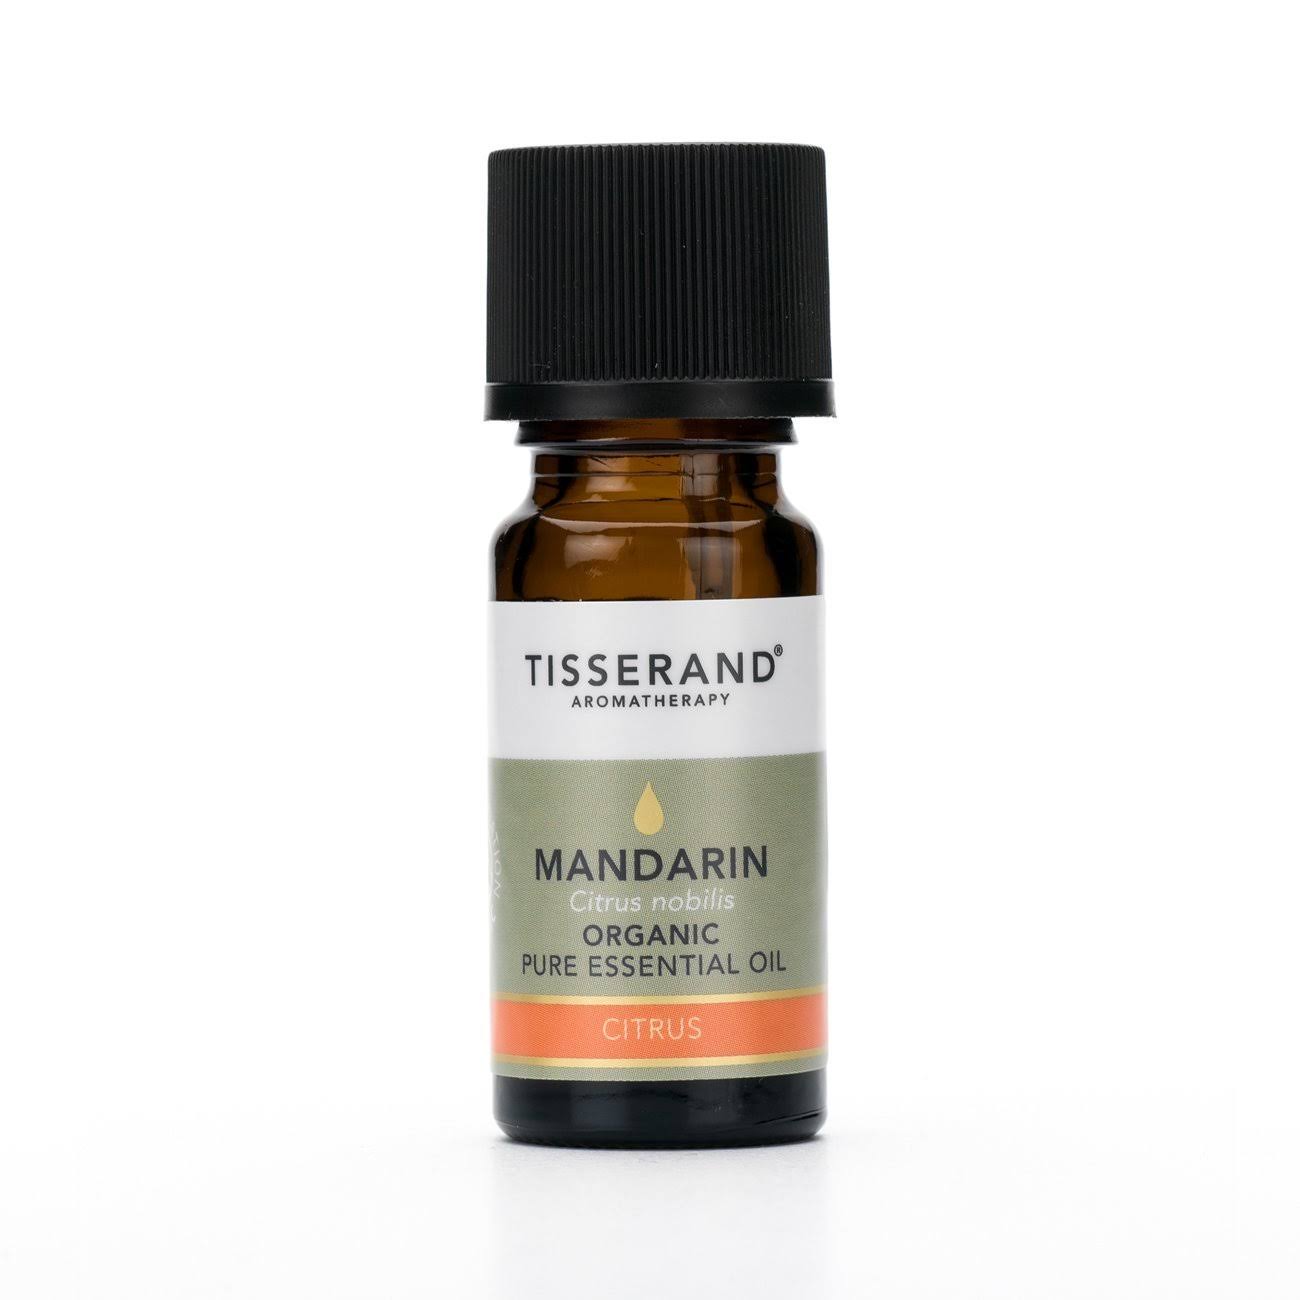 Tisserand Mandarin Organic Essential Oil - 9ml